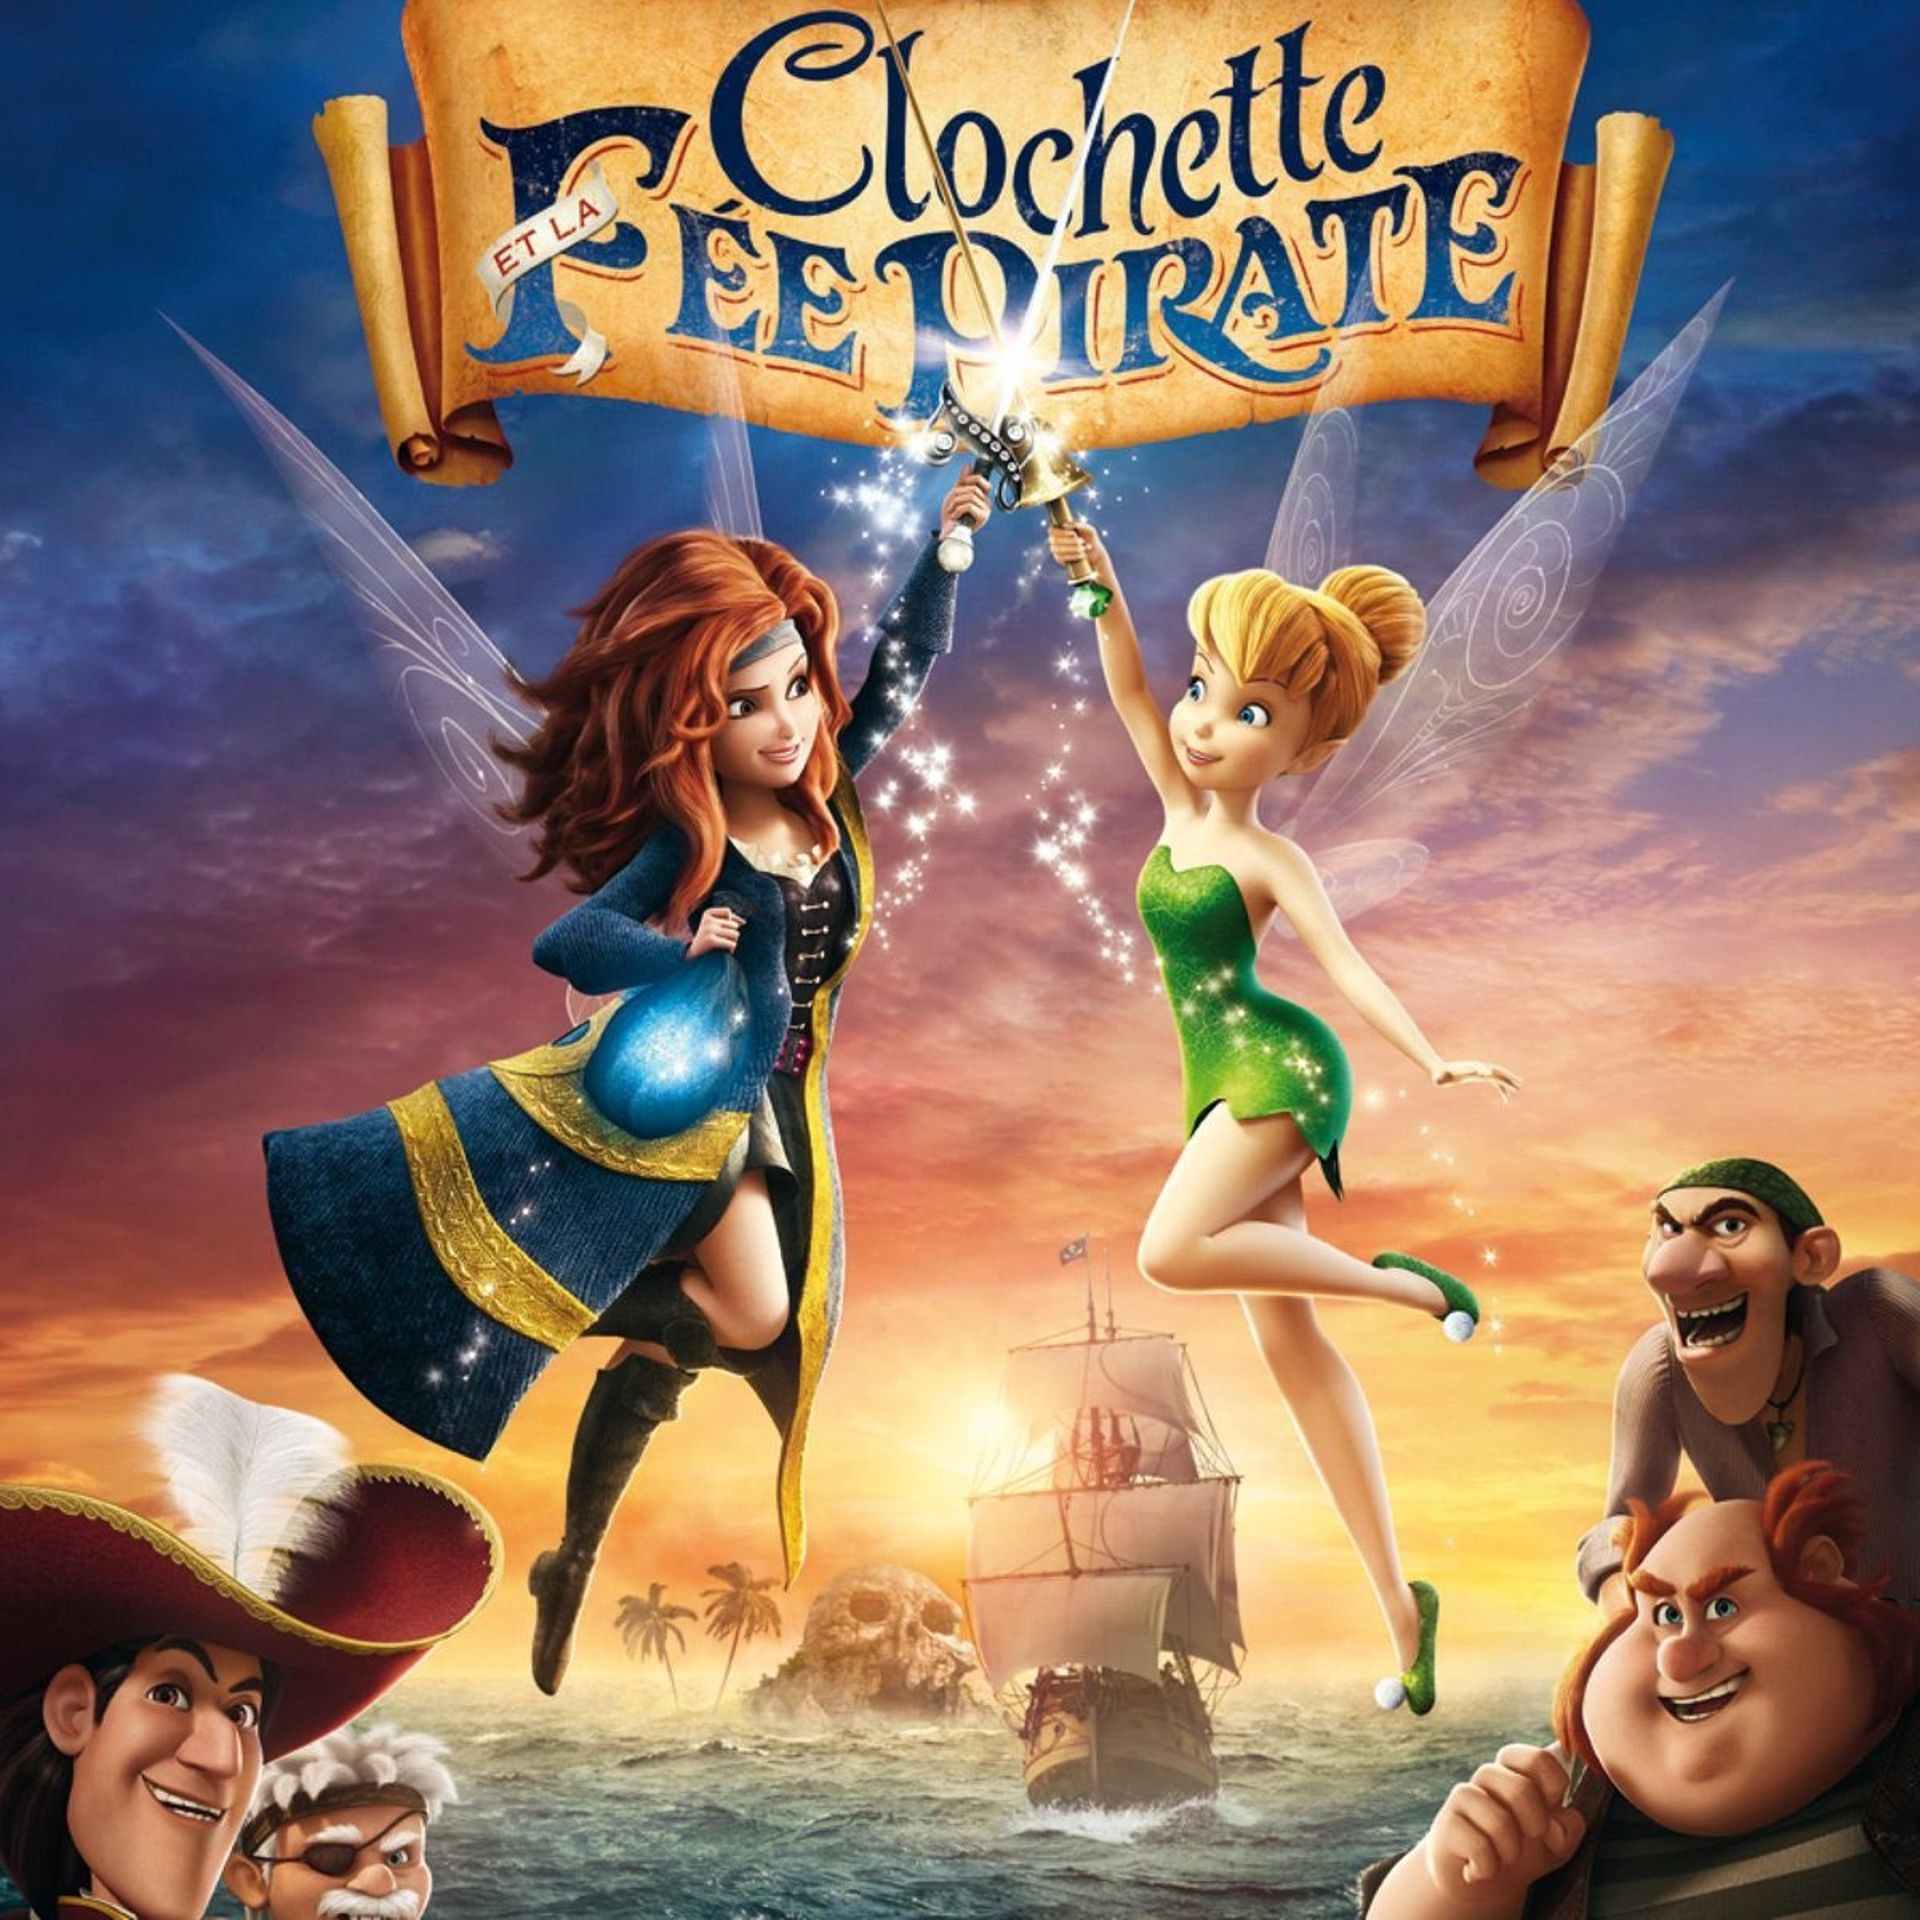 Fée Clochette - : LA FEE CLOCHETTE - Disney Cinéma